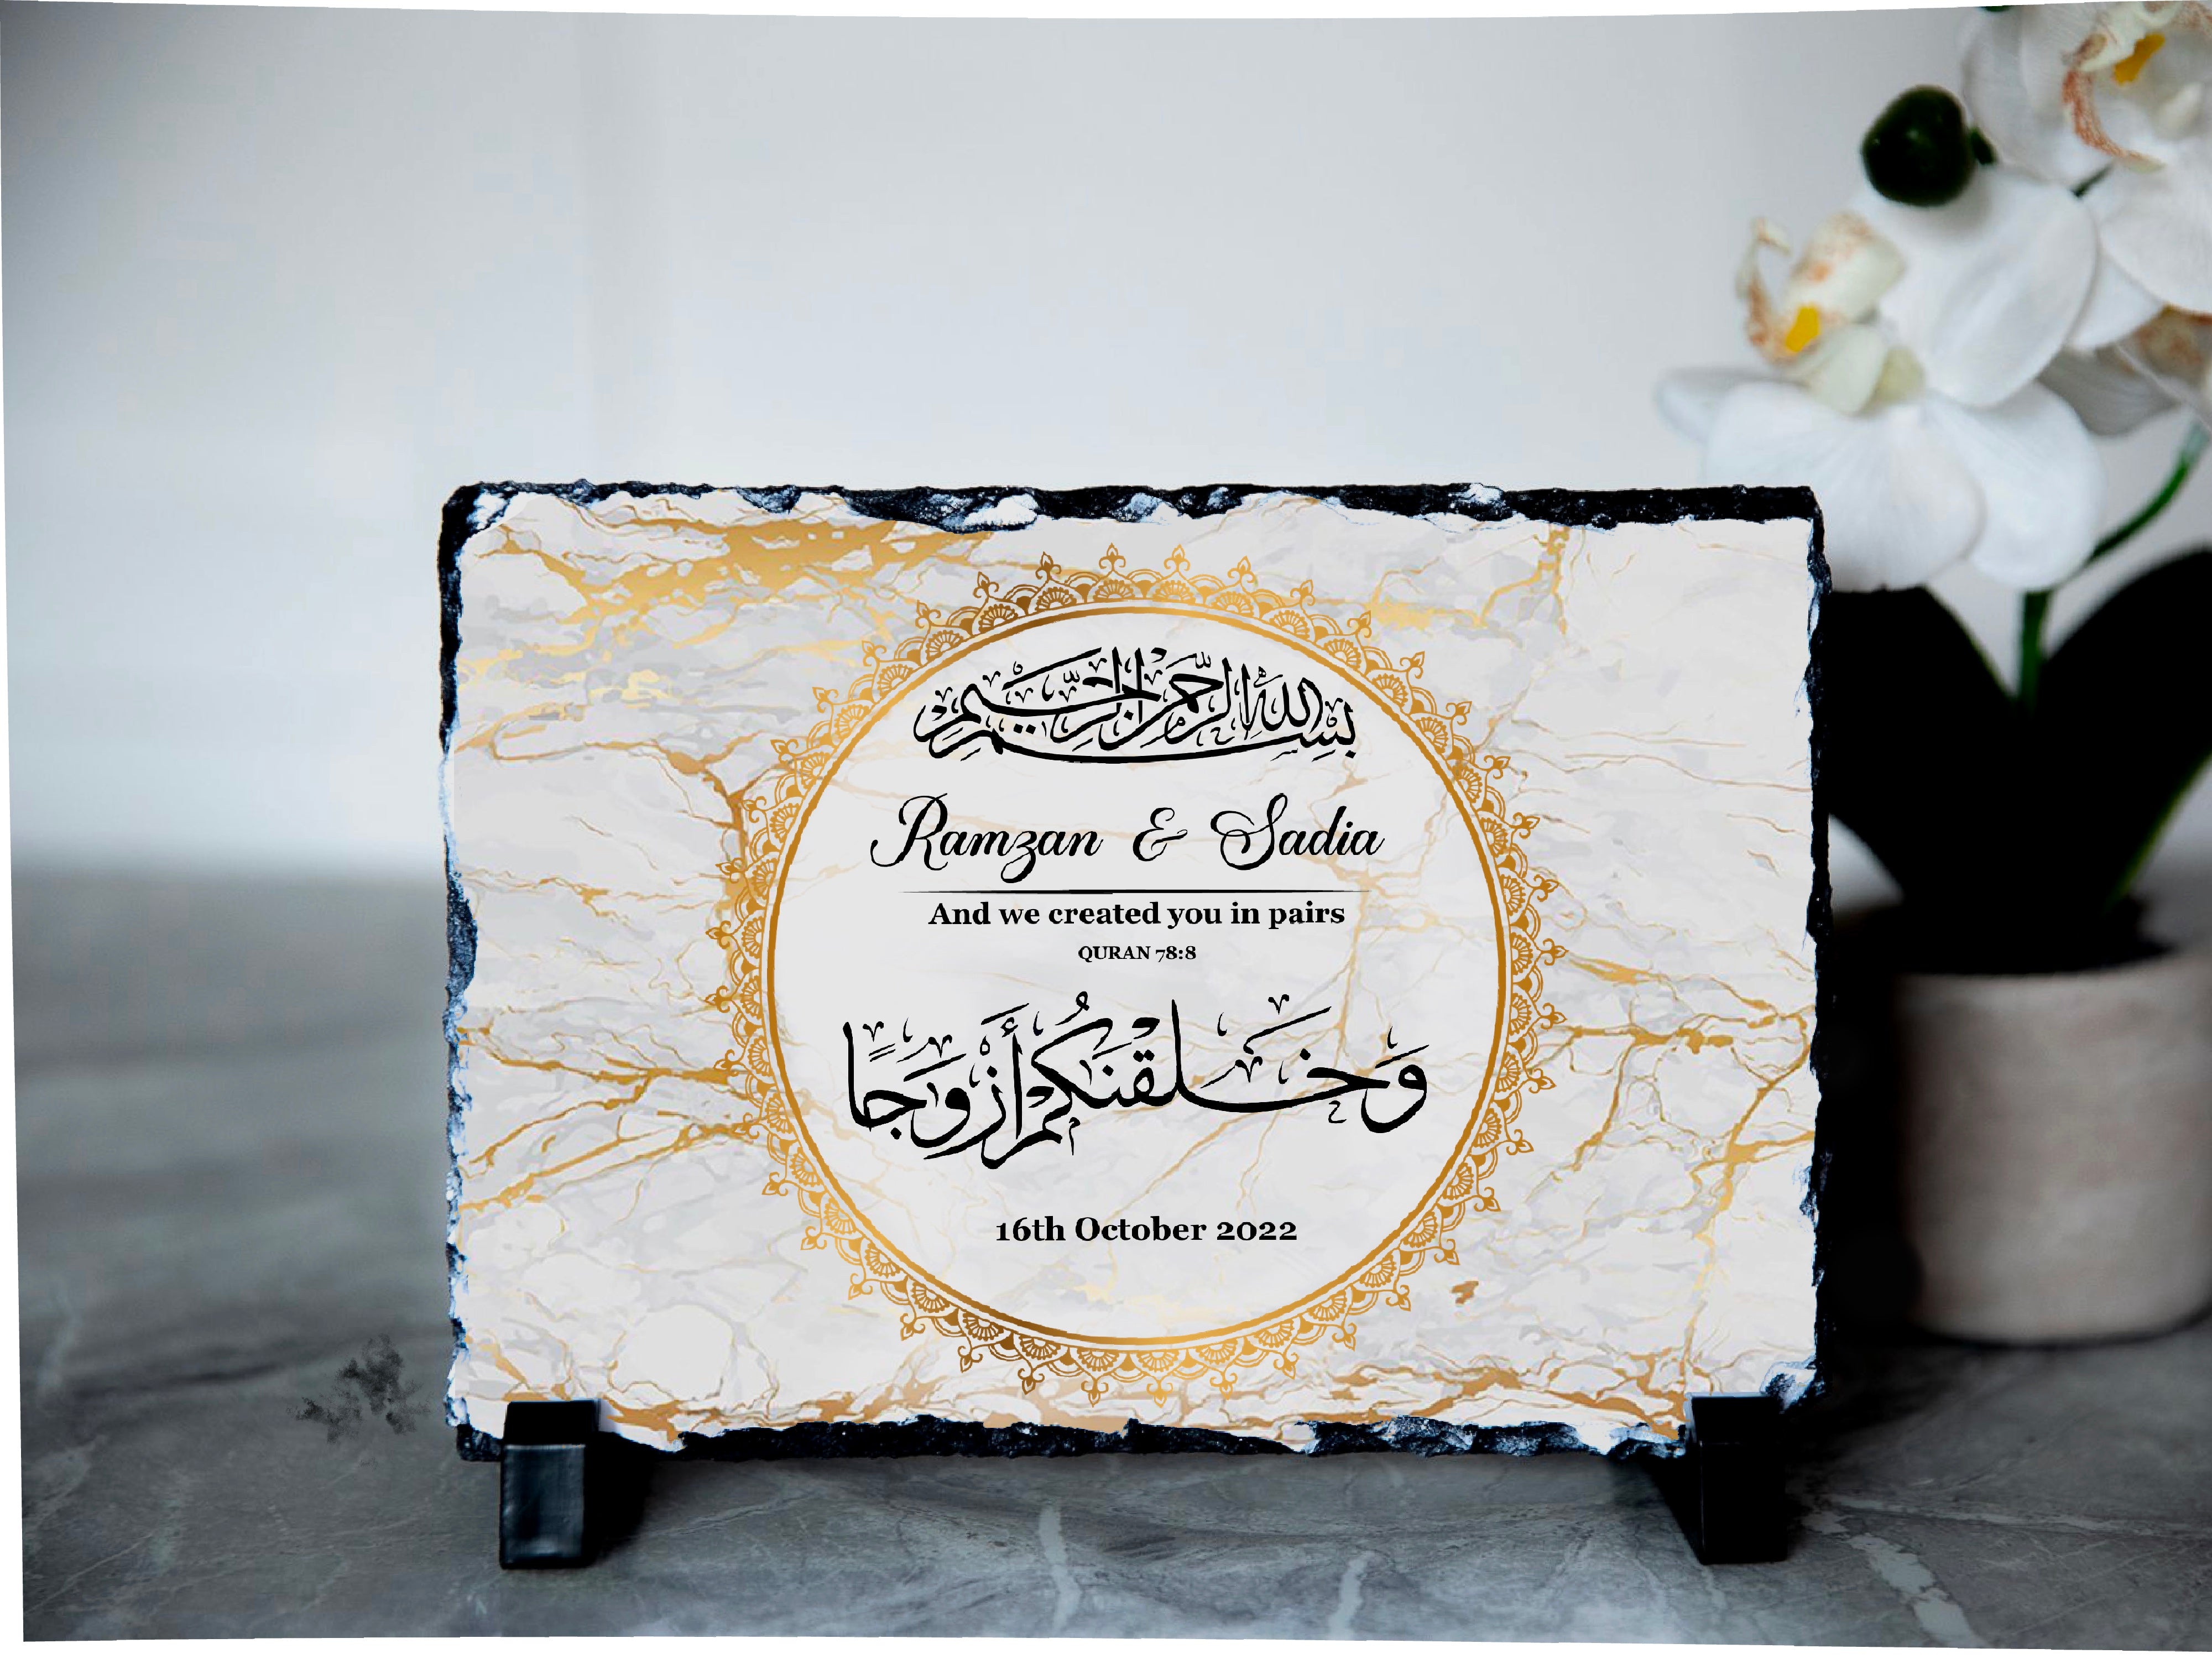 Celebrate Love - Muslim Wedding Gifts That Inspire